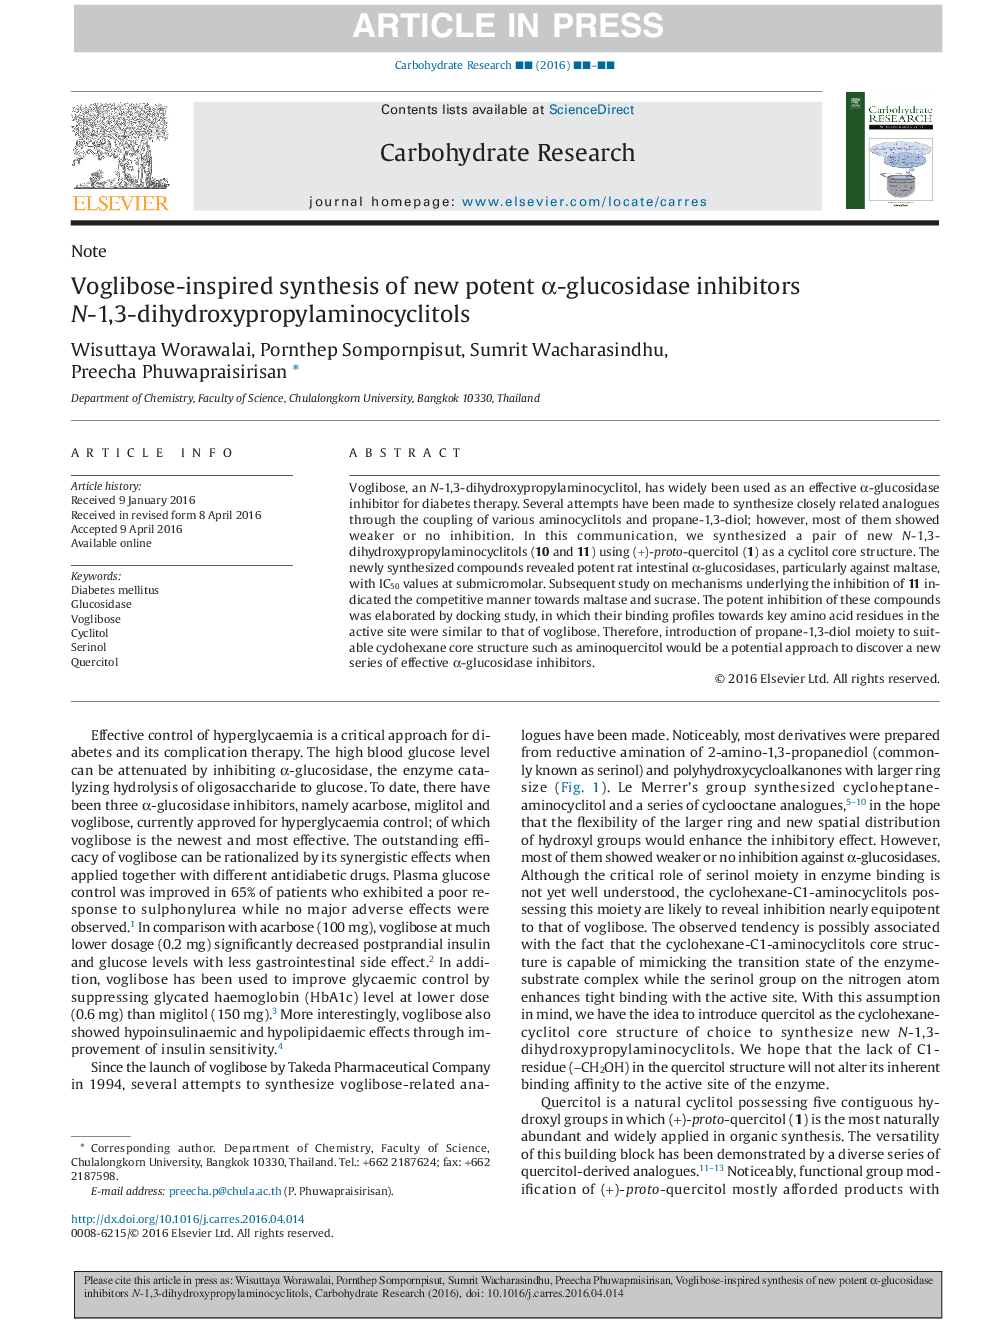 Voglibose-inspired synthesis of new potent Î±-glucosidase inhibitors N-1,3-dihydroxypropylaminocyclitols